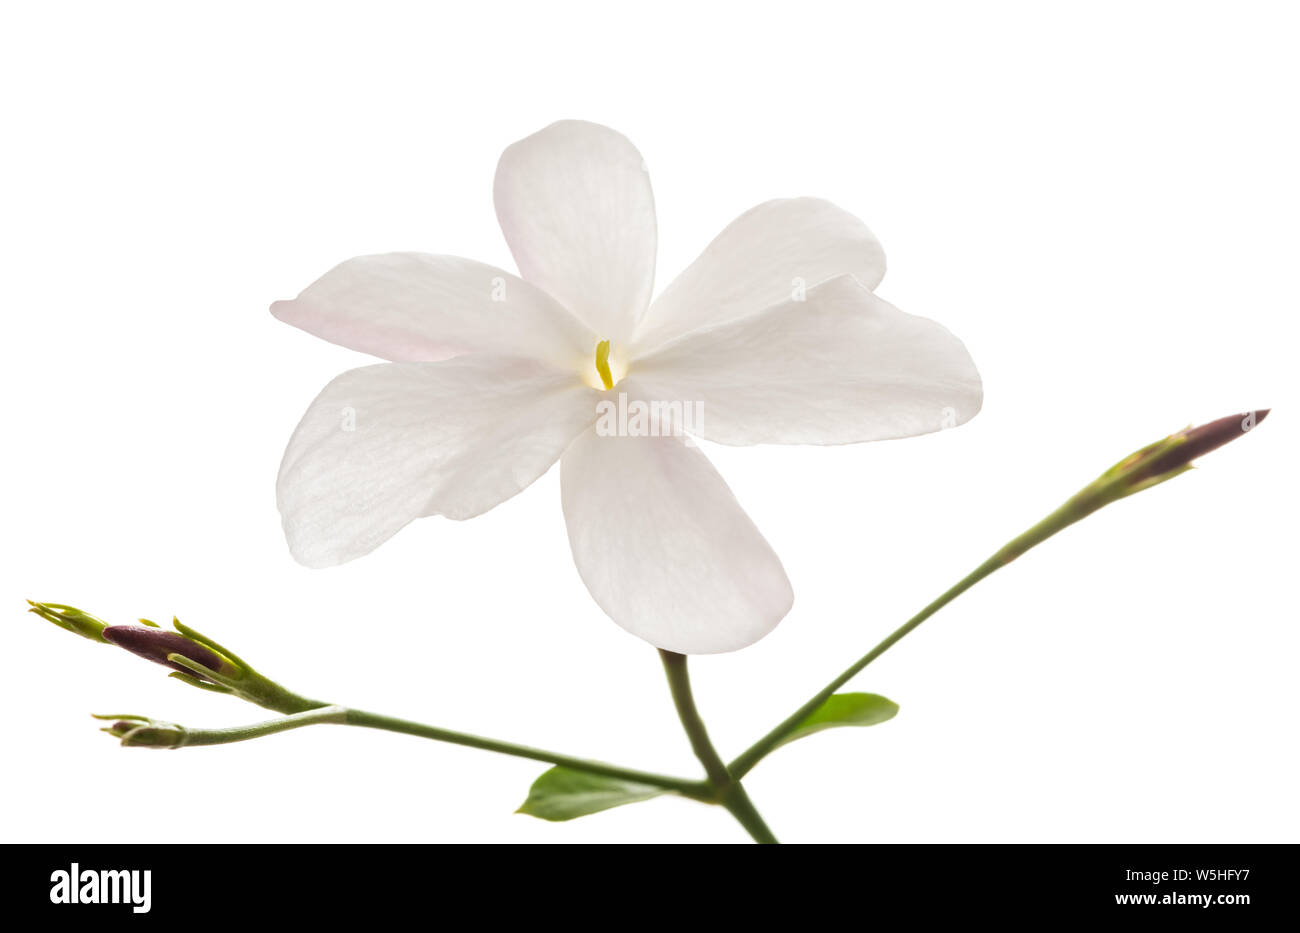 Jasmine flower with leaf isolated on white Stock Photo